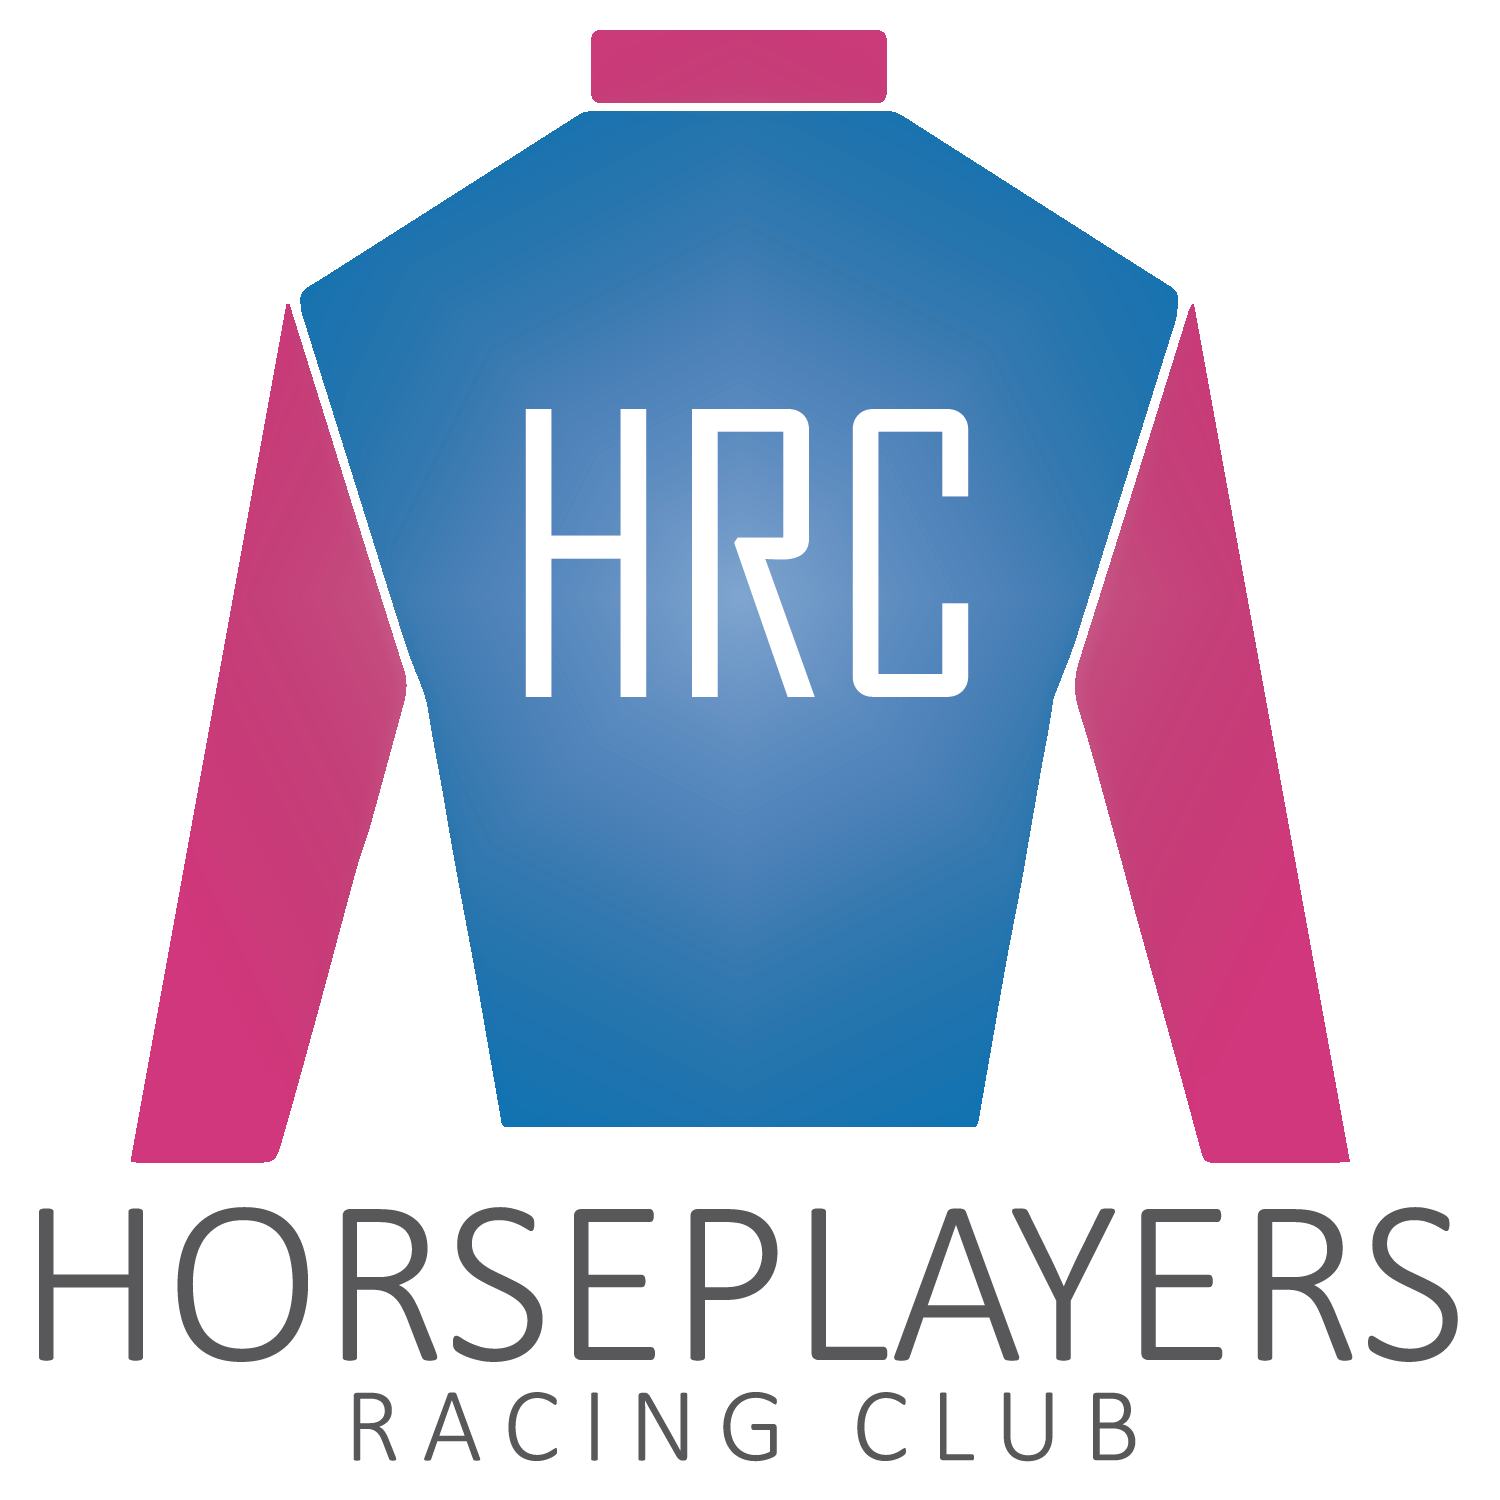 Horseplayers Racing Club